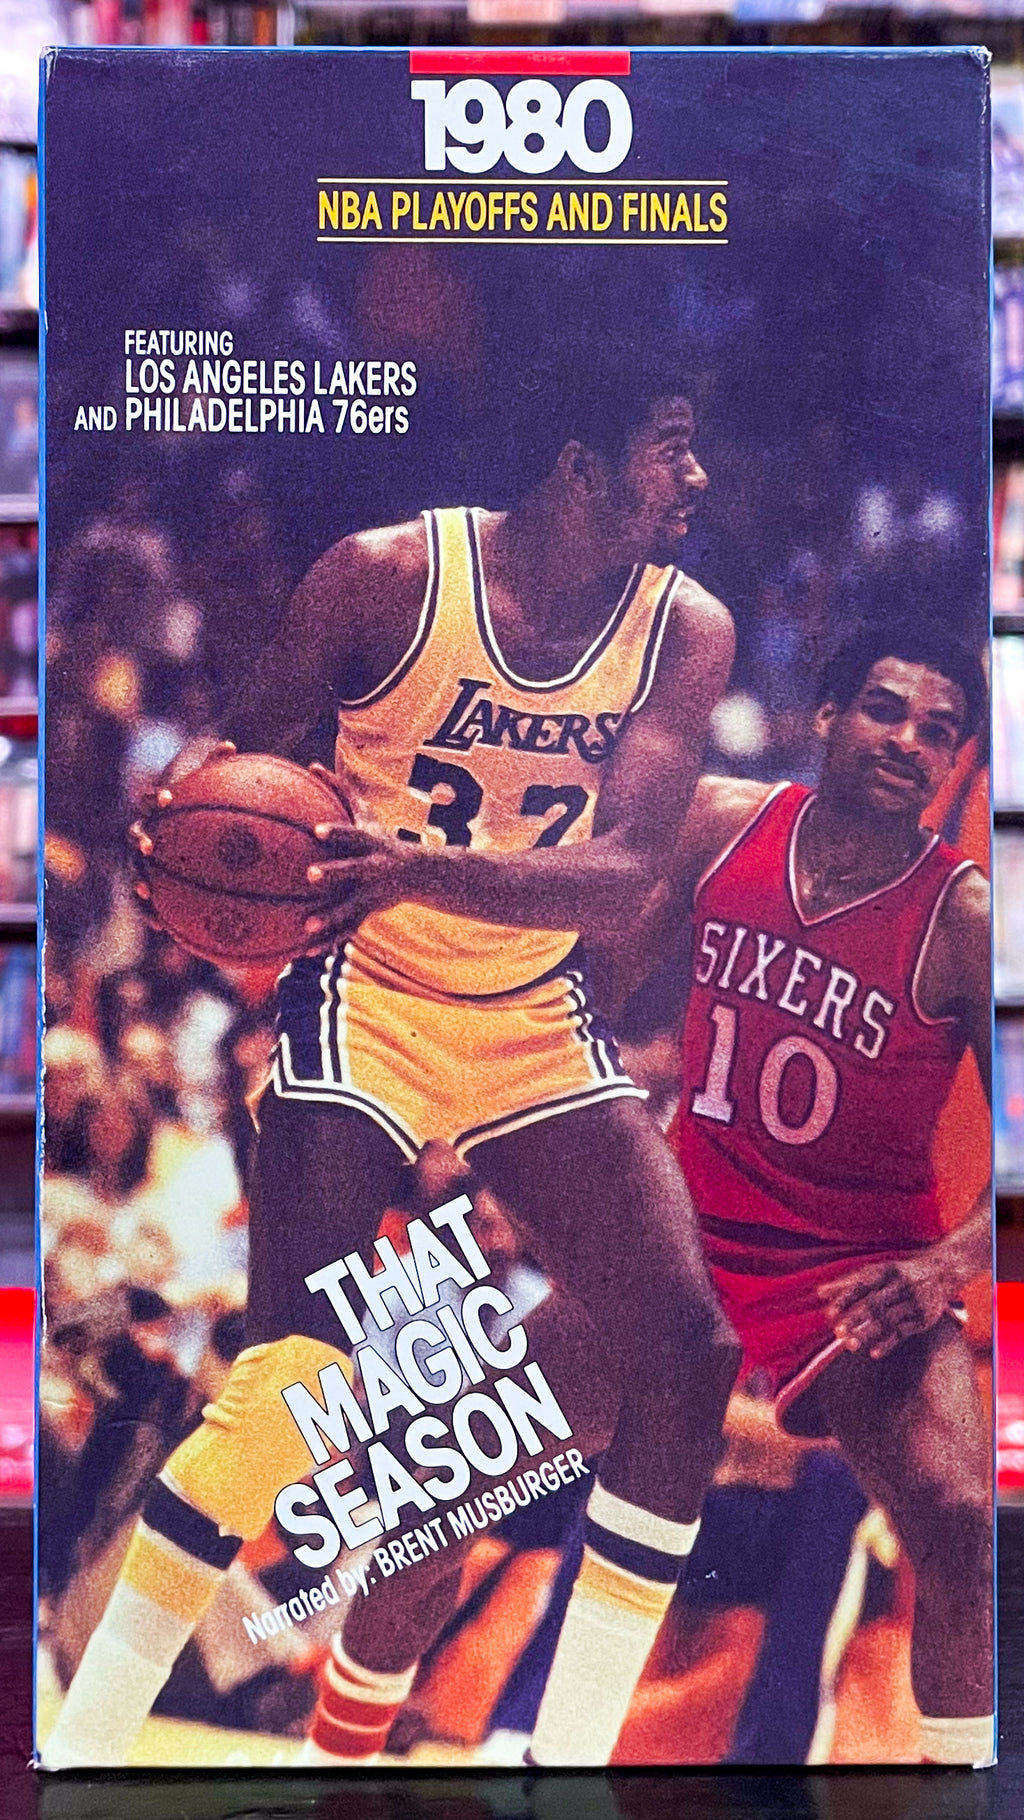 1980 NBA Playoffs and Finals That Magic Season